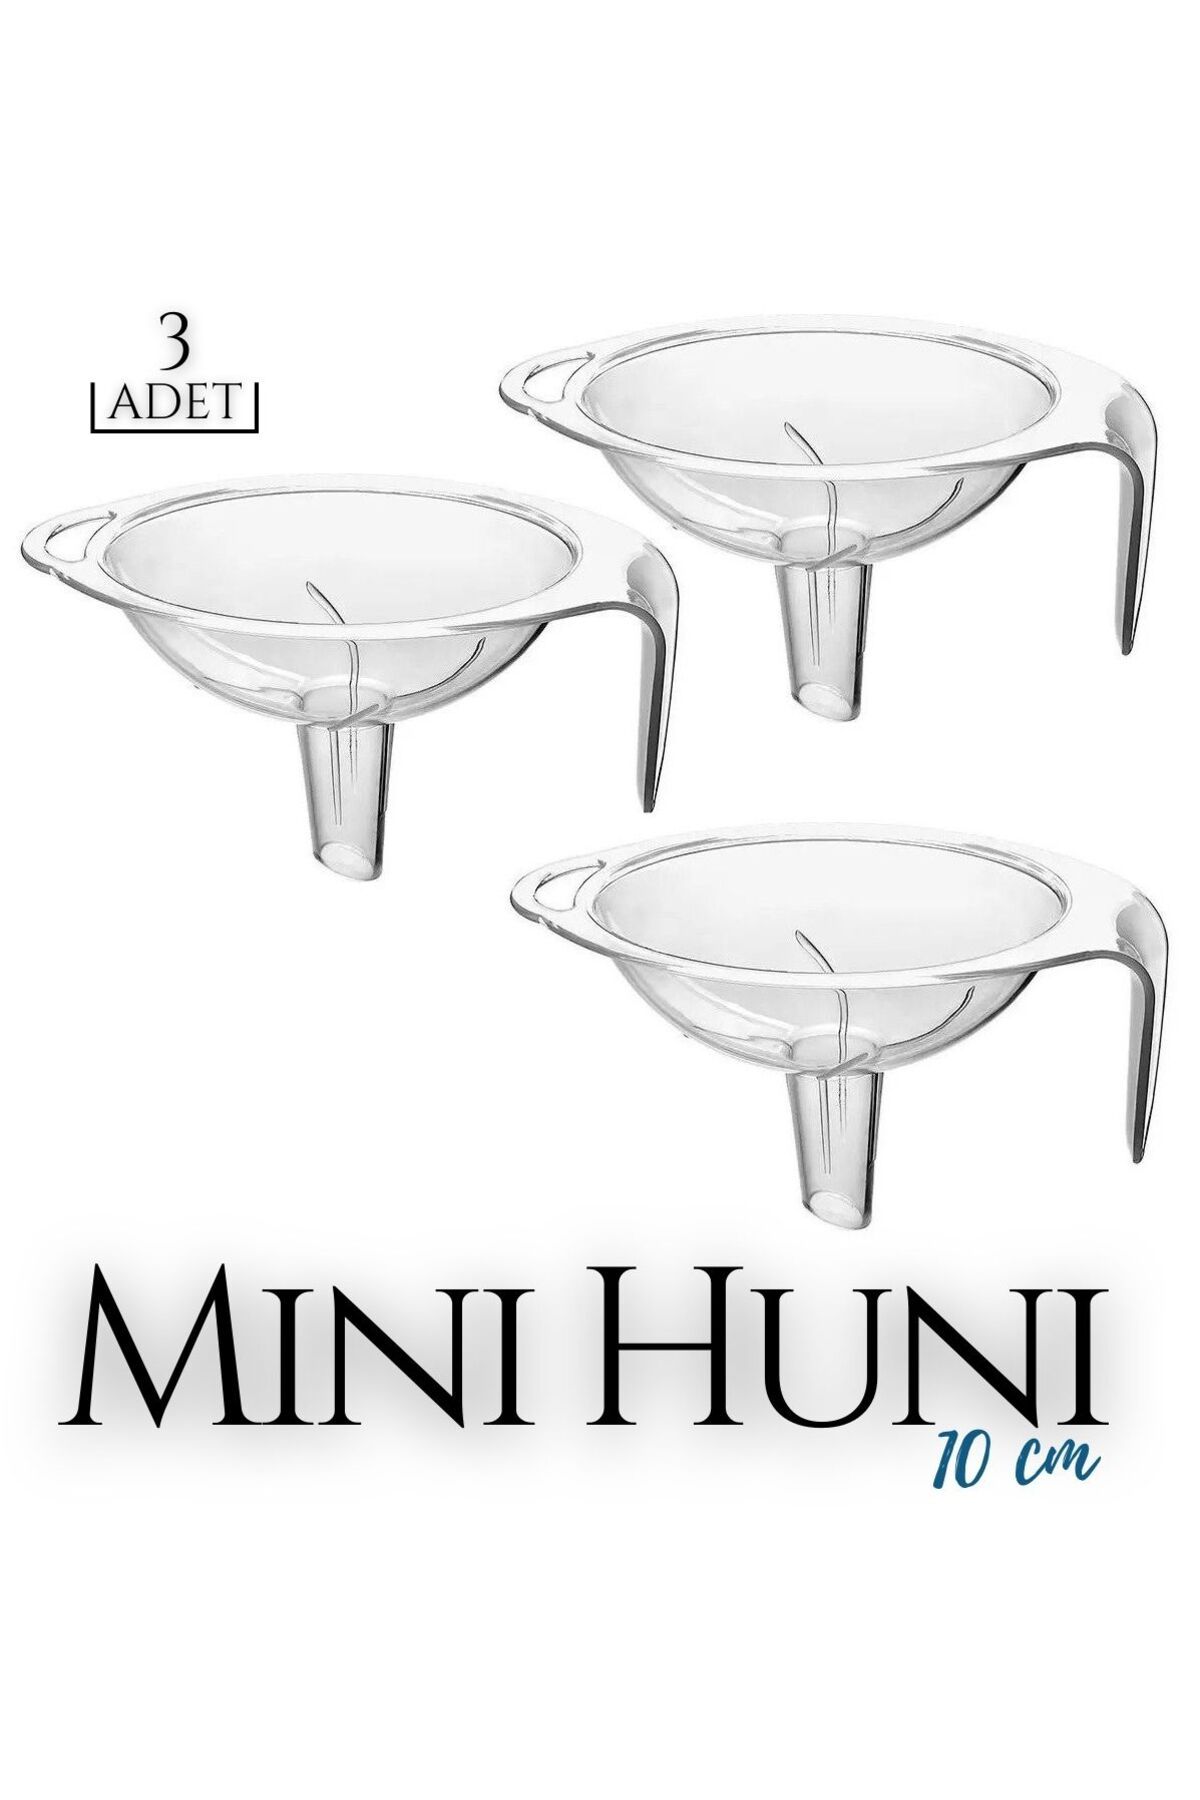 Transformacion Mini Huni 3 lü Set Zinsmeister Design